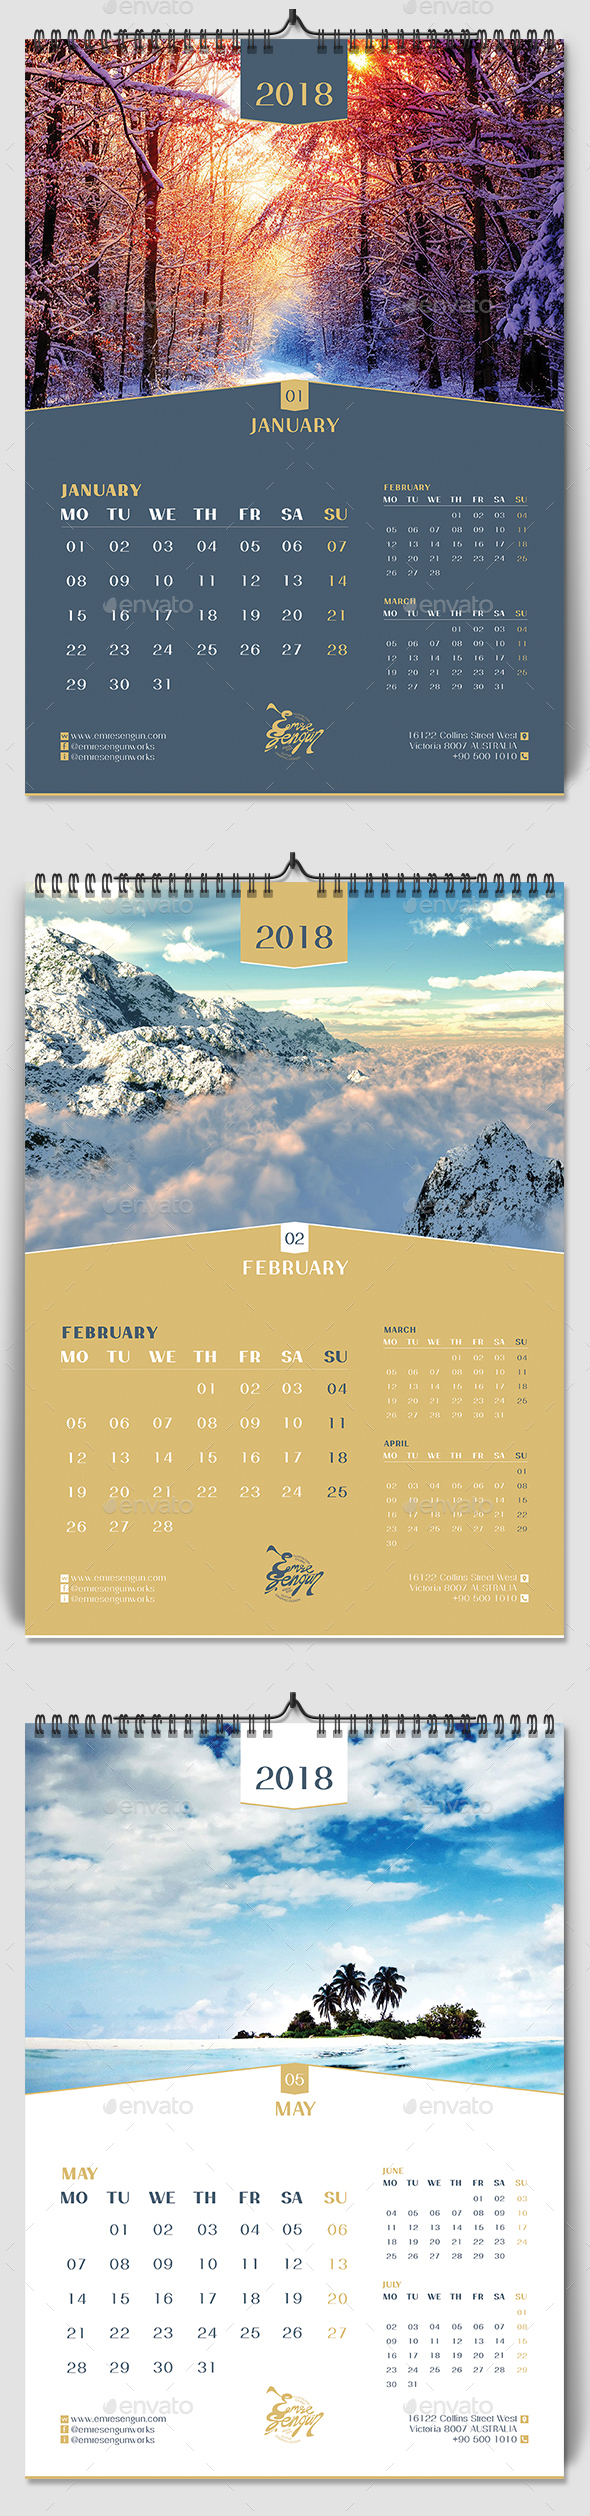 2018 Wall Calendar Minimal Vol.5